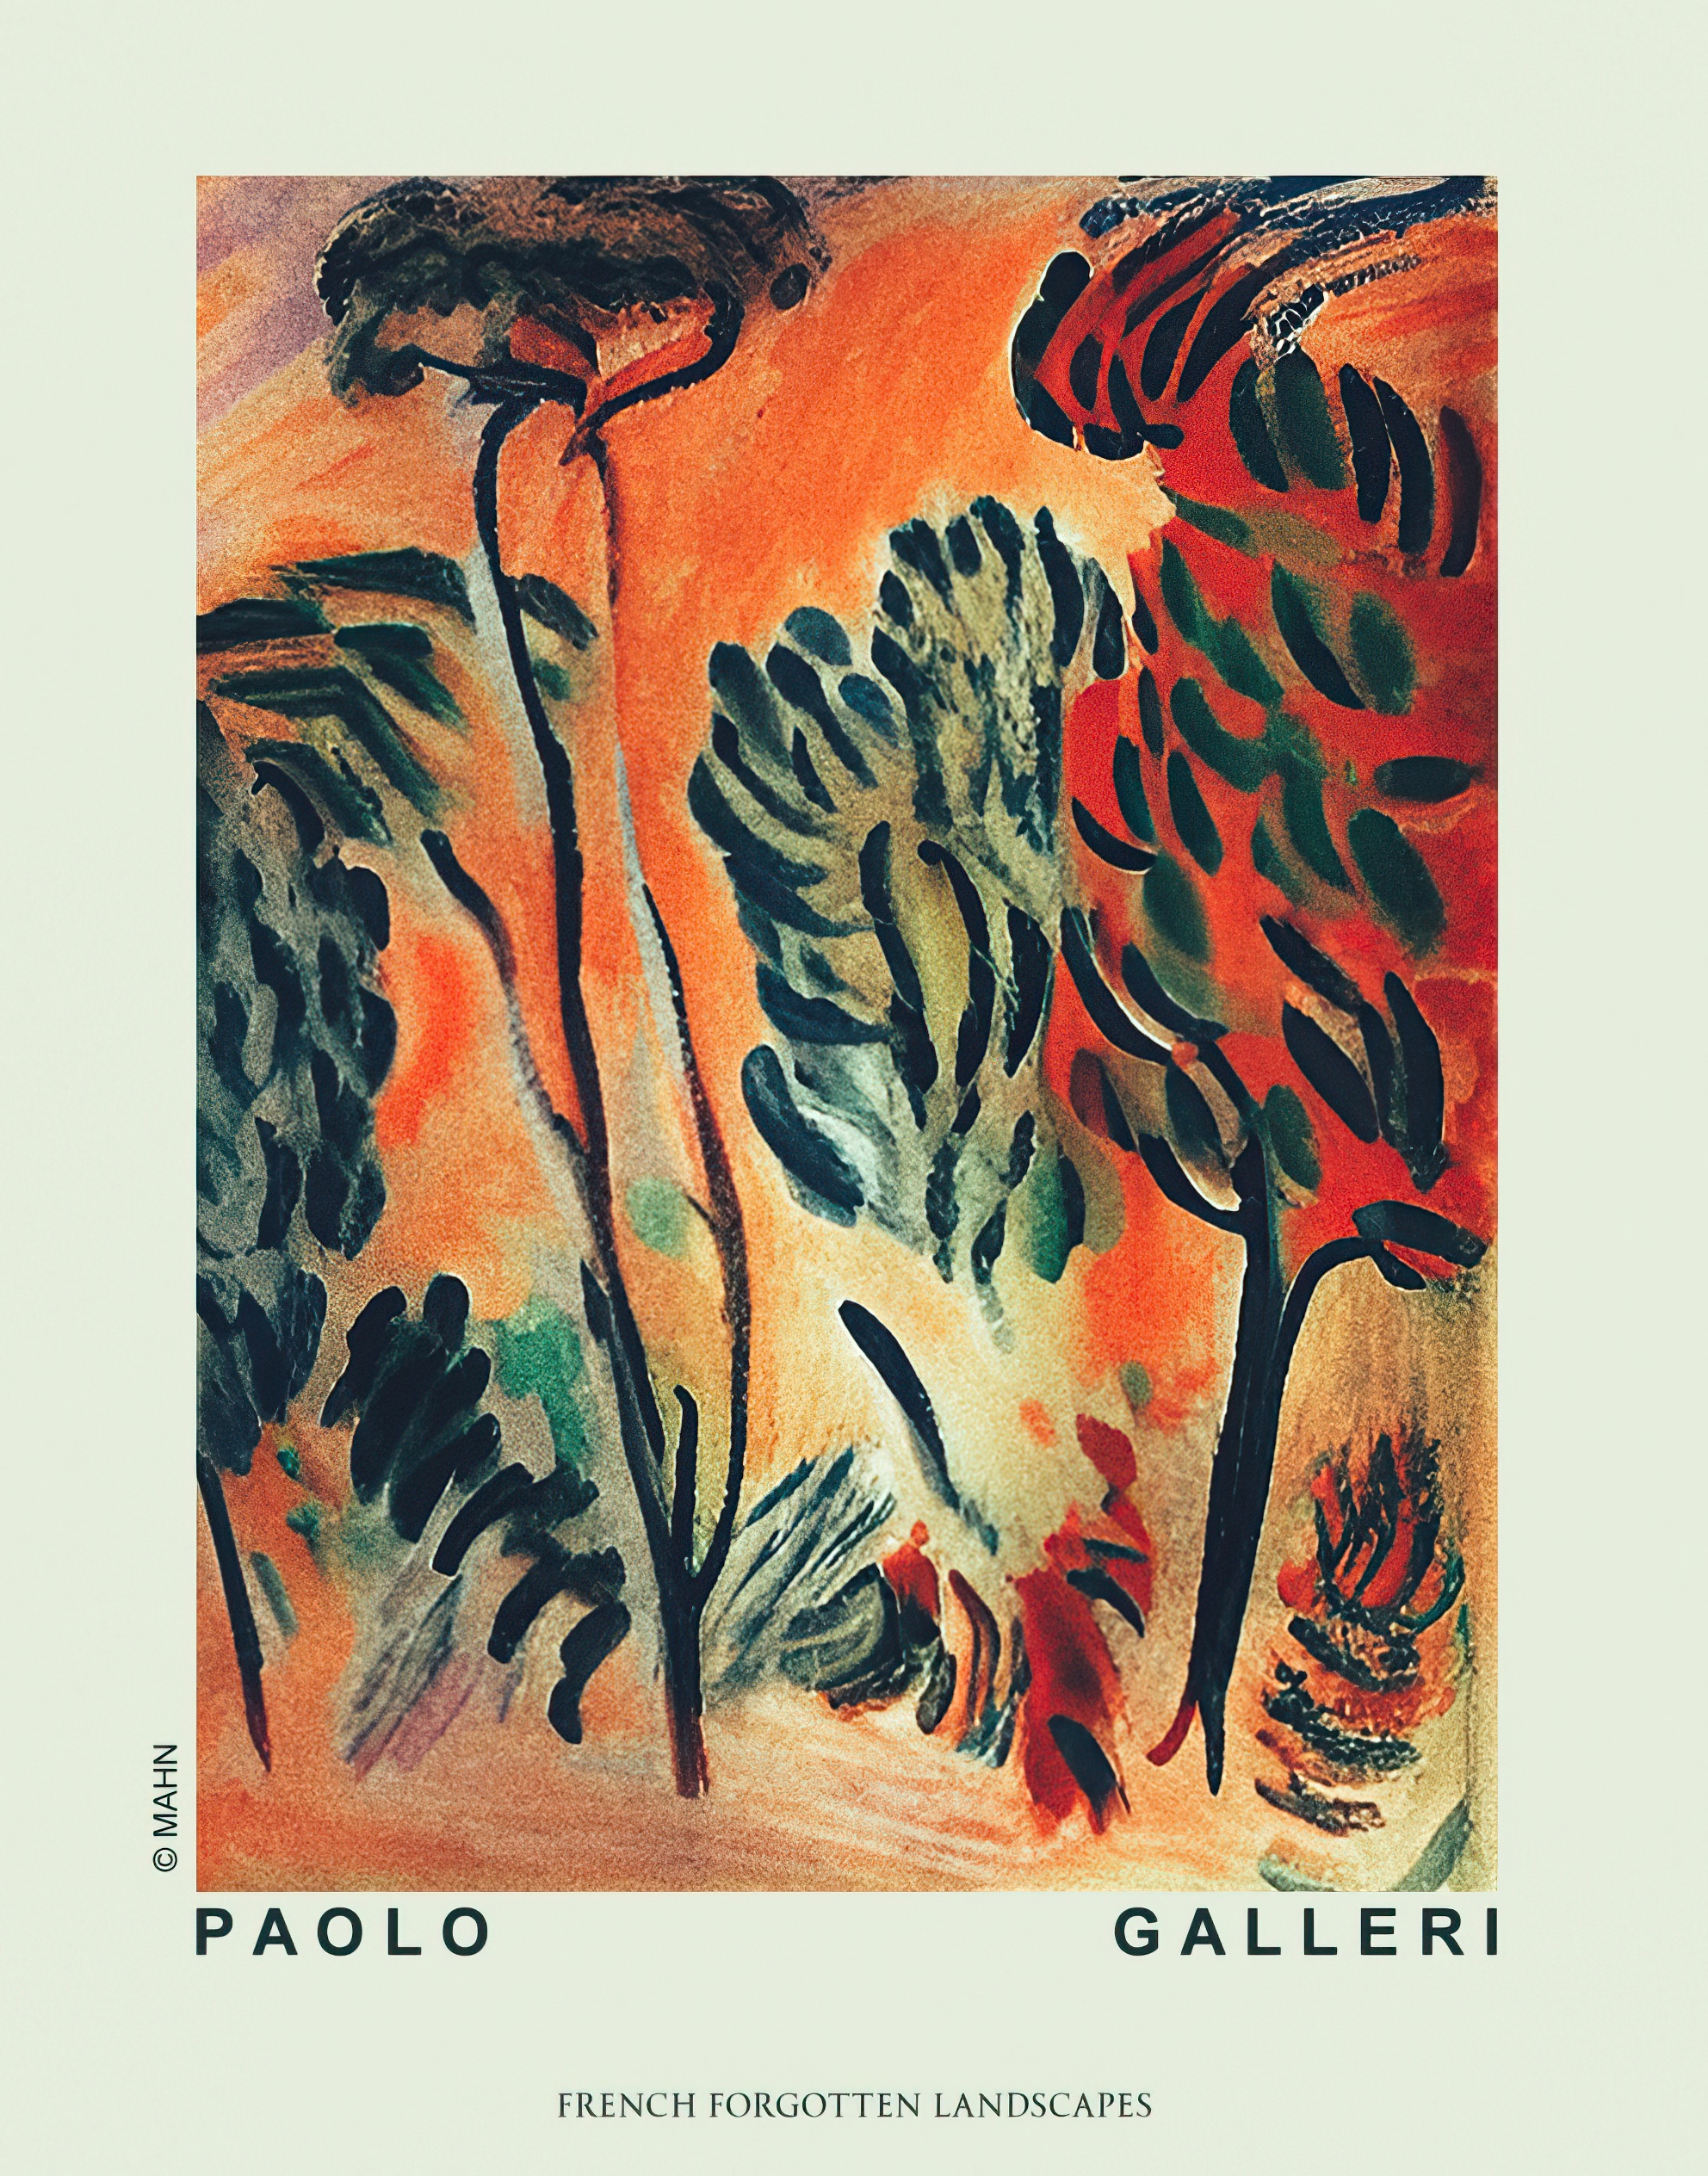 'The Esterel Forest #3' |Paolo Galleri|